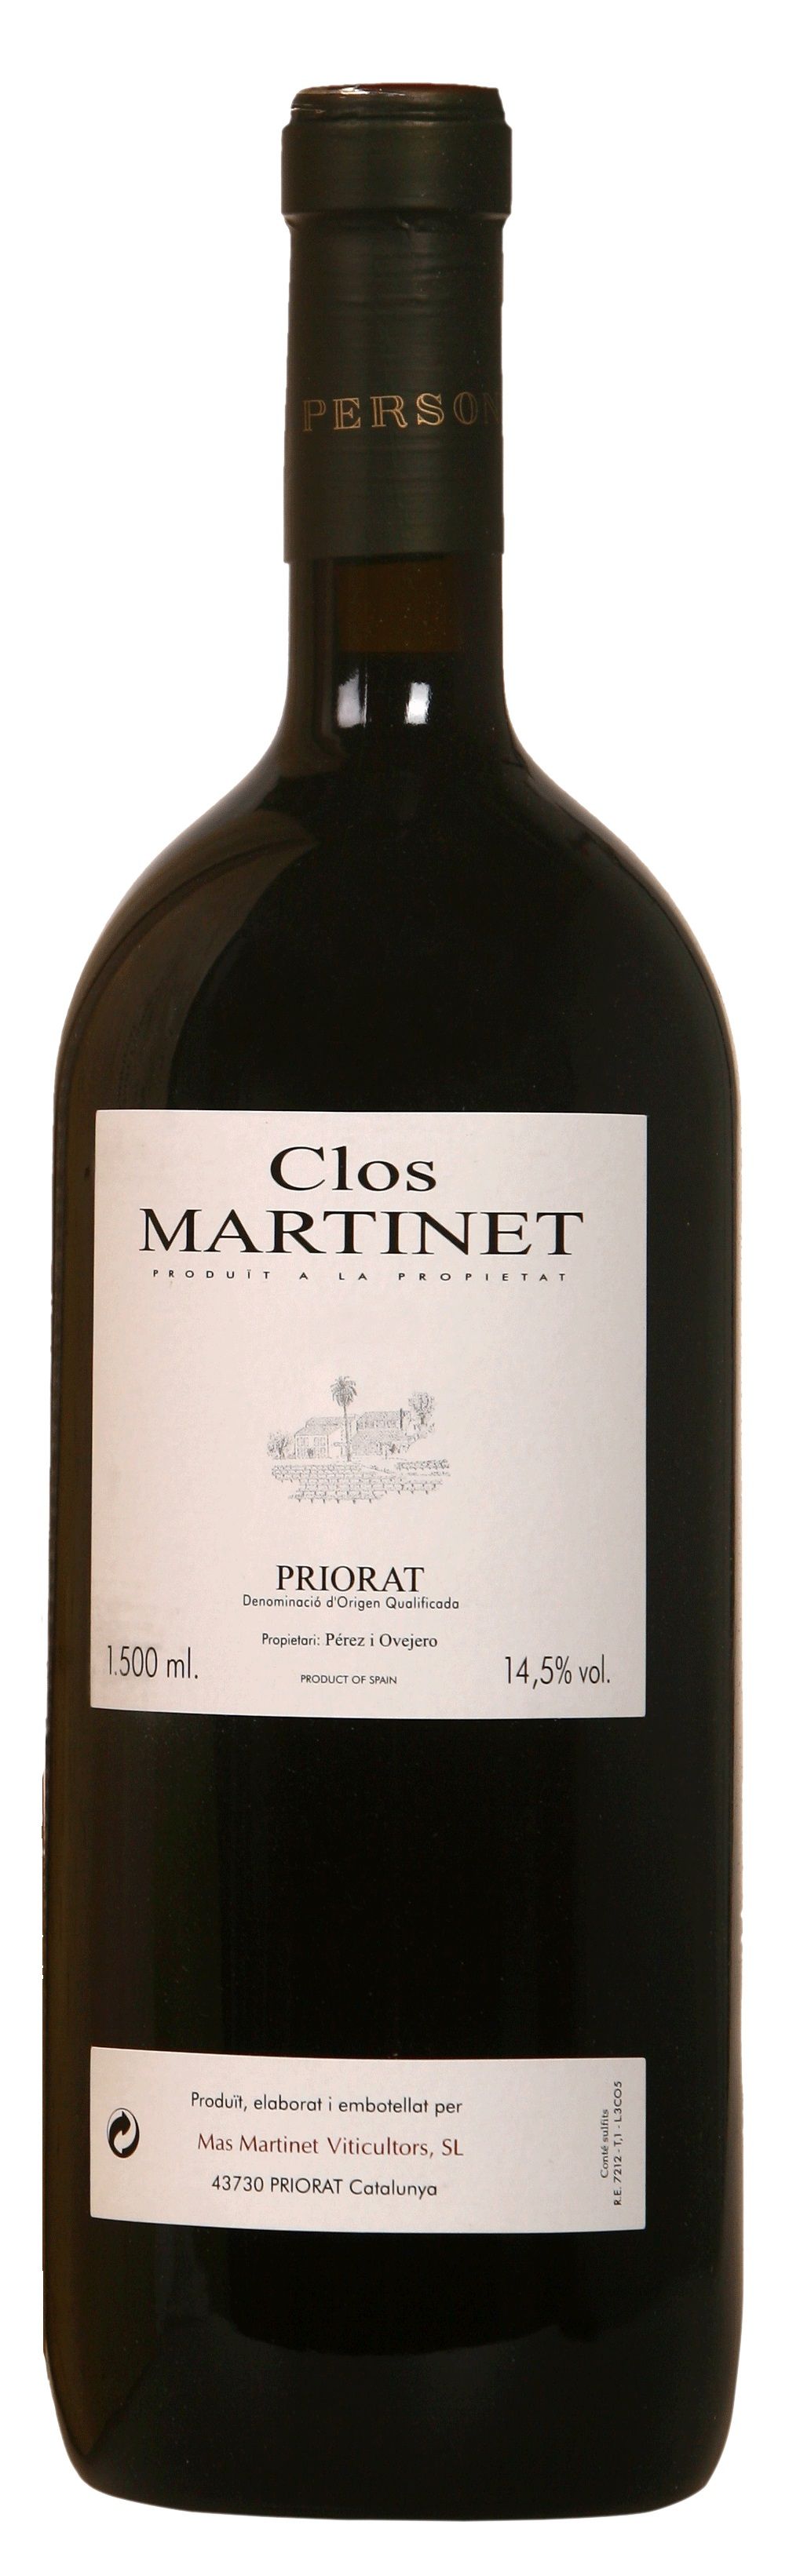 Mas Martinet, Clos Martinet, 2013